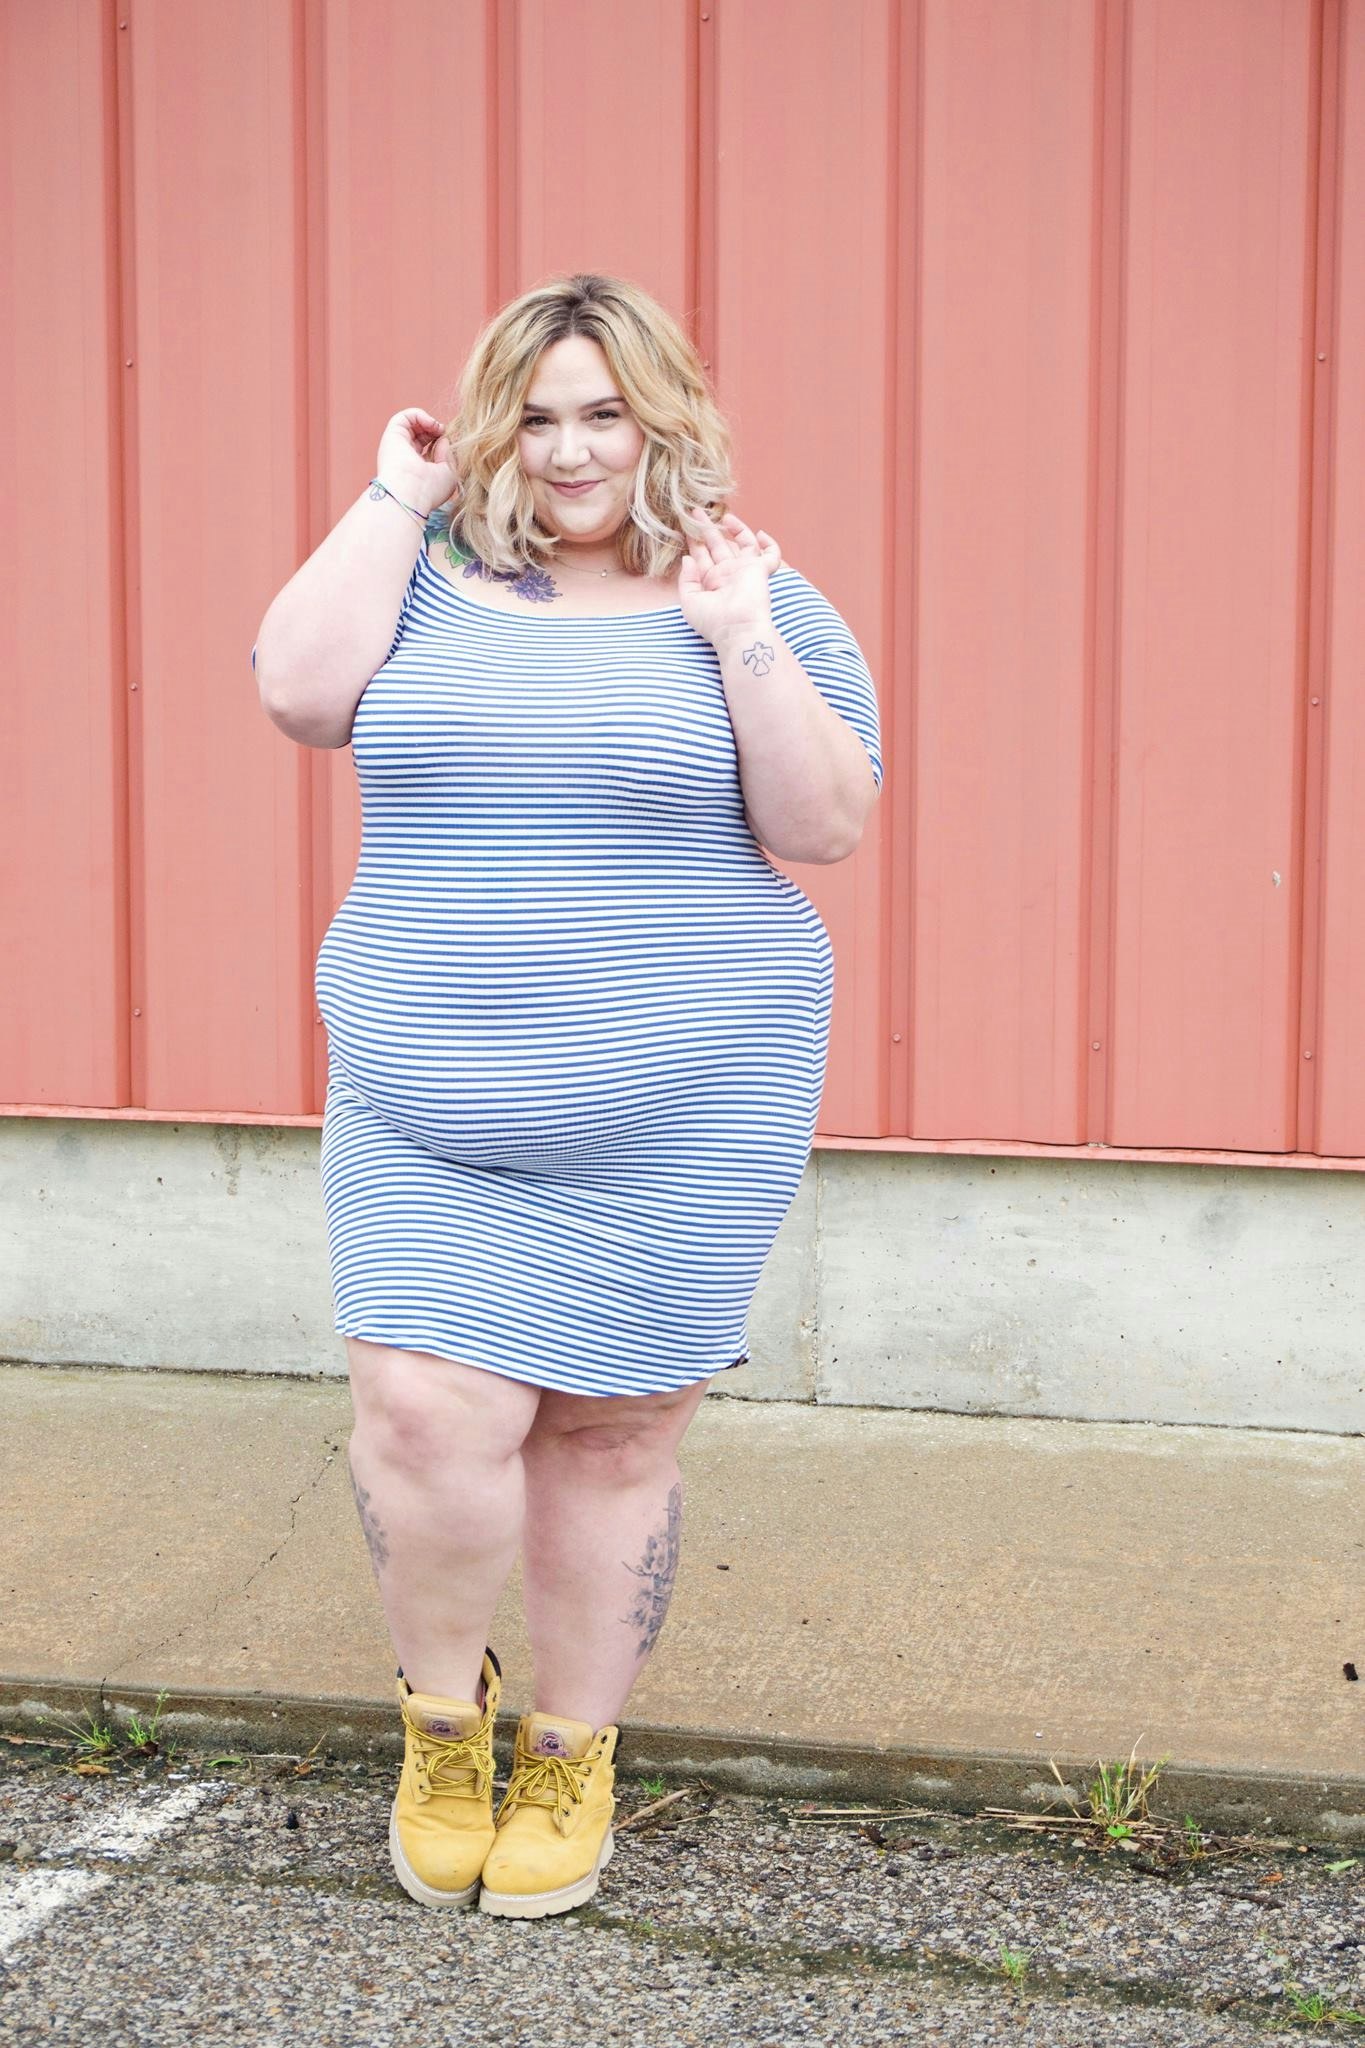 We love chubby girl blog